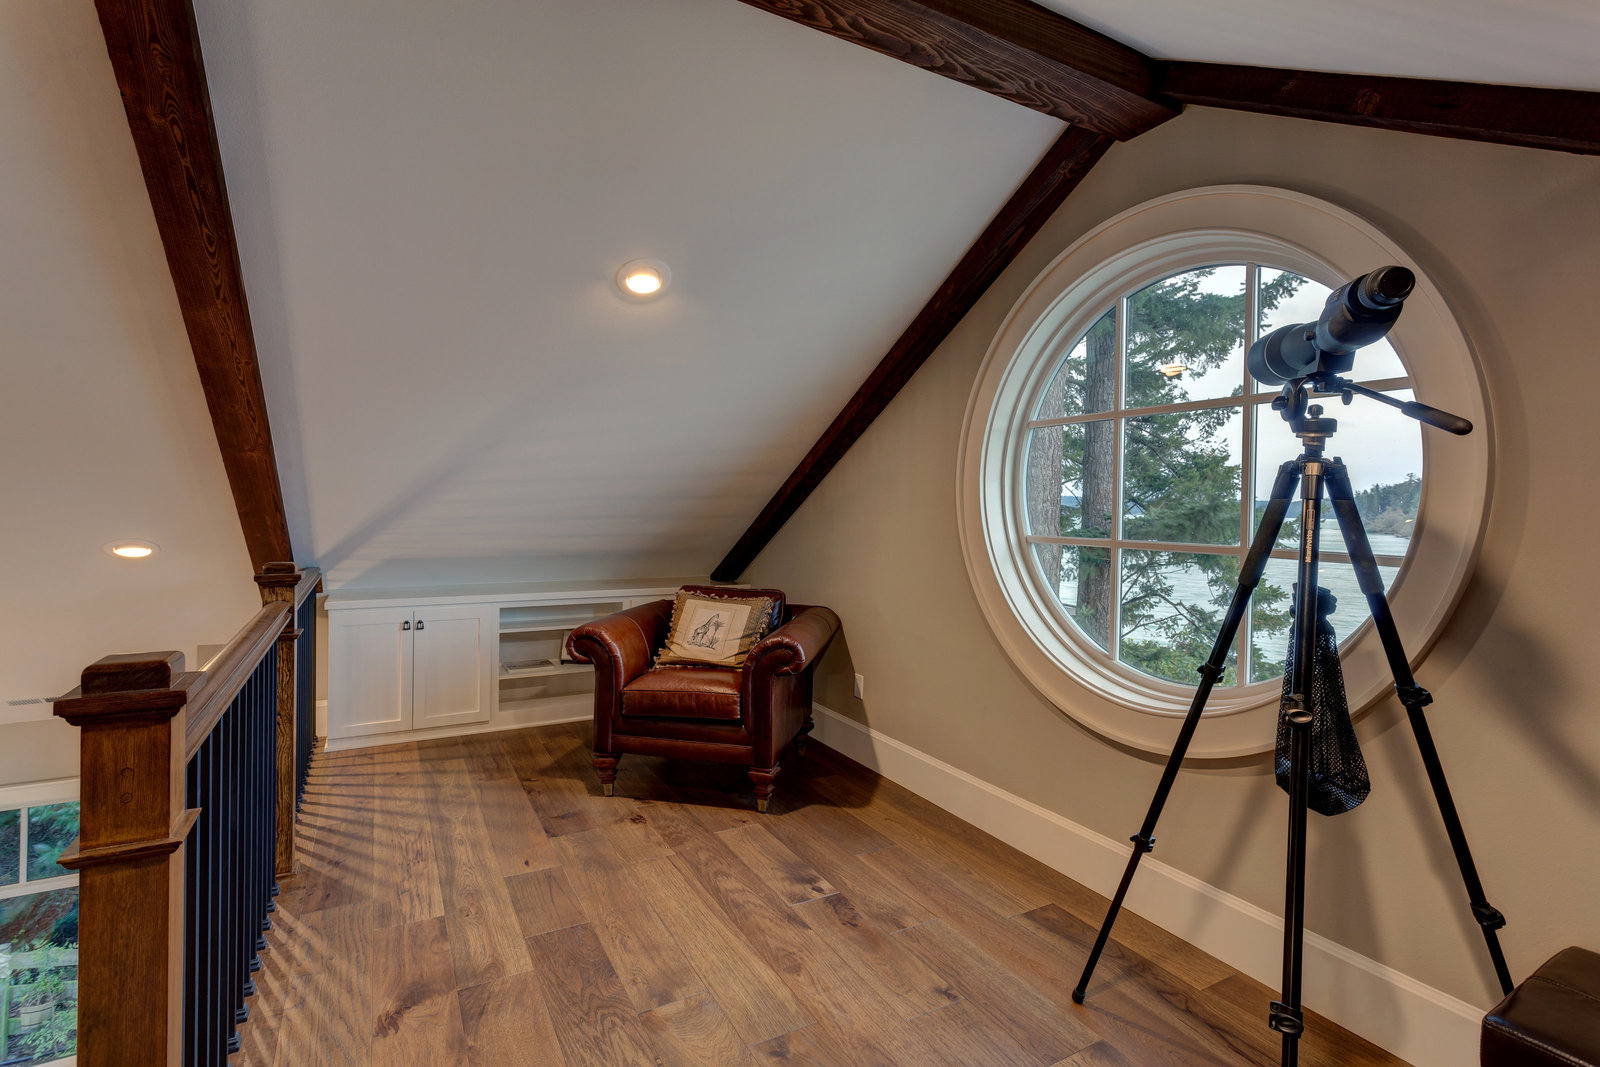 hideaway attic space with portal window